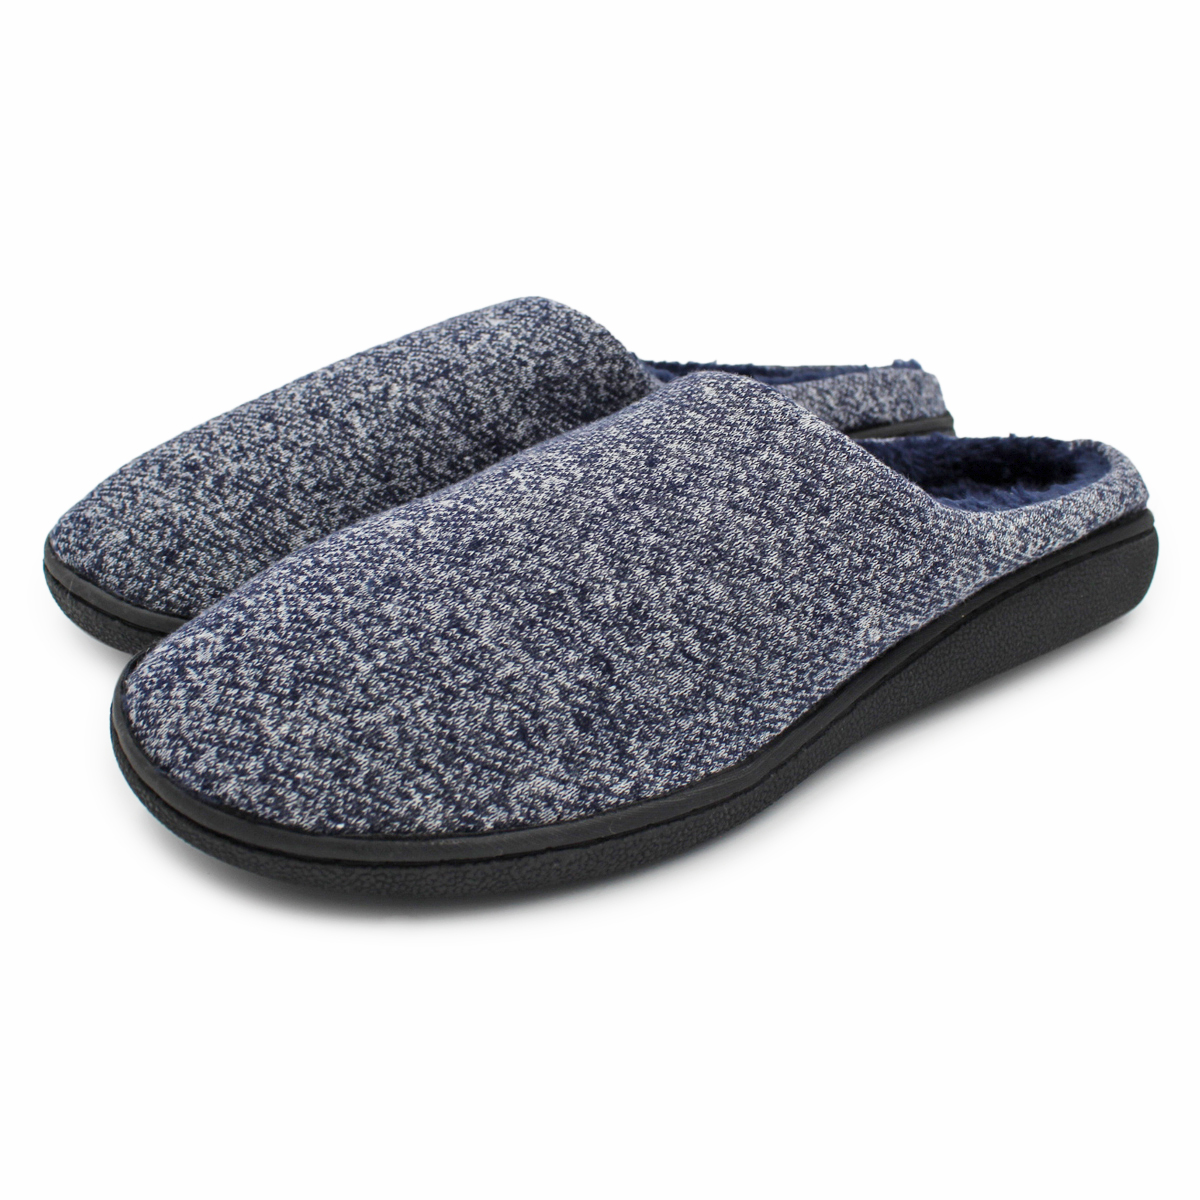 Men's Bedroom Slippers Fur Lined House Shoes Winter Christmas Slides | eBay